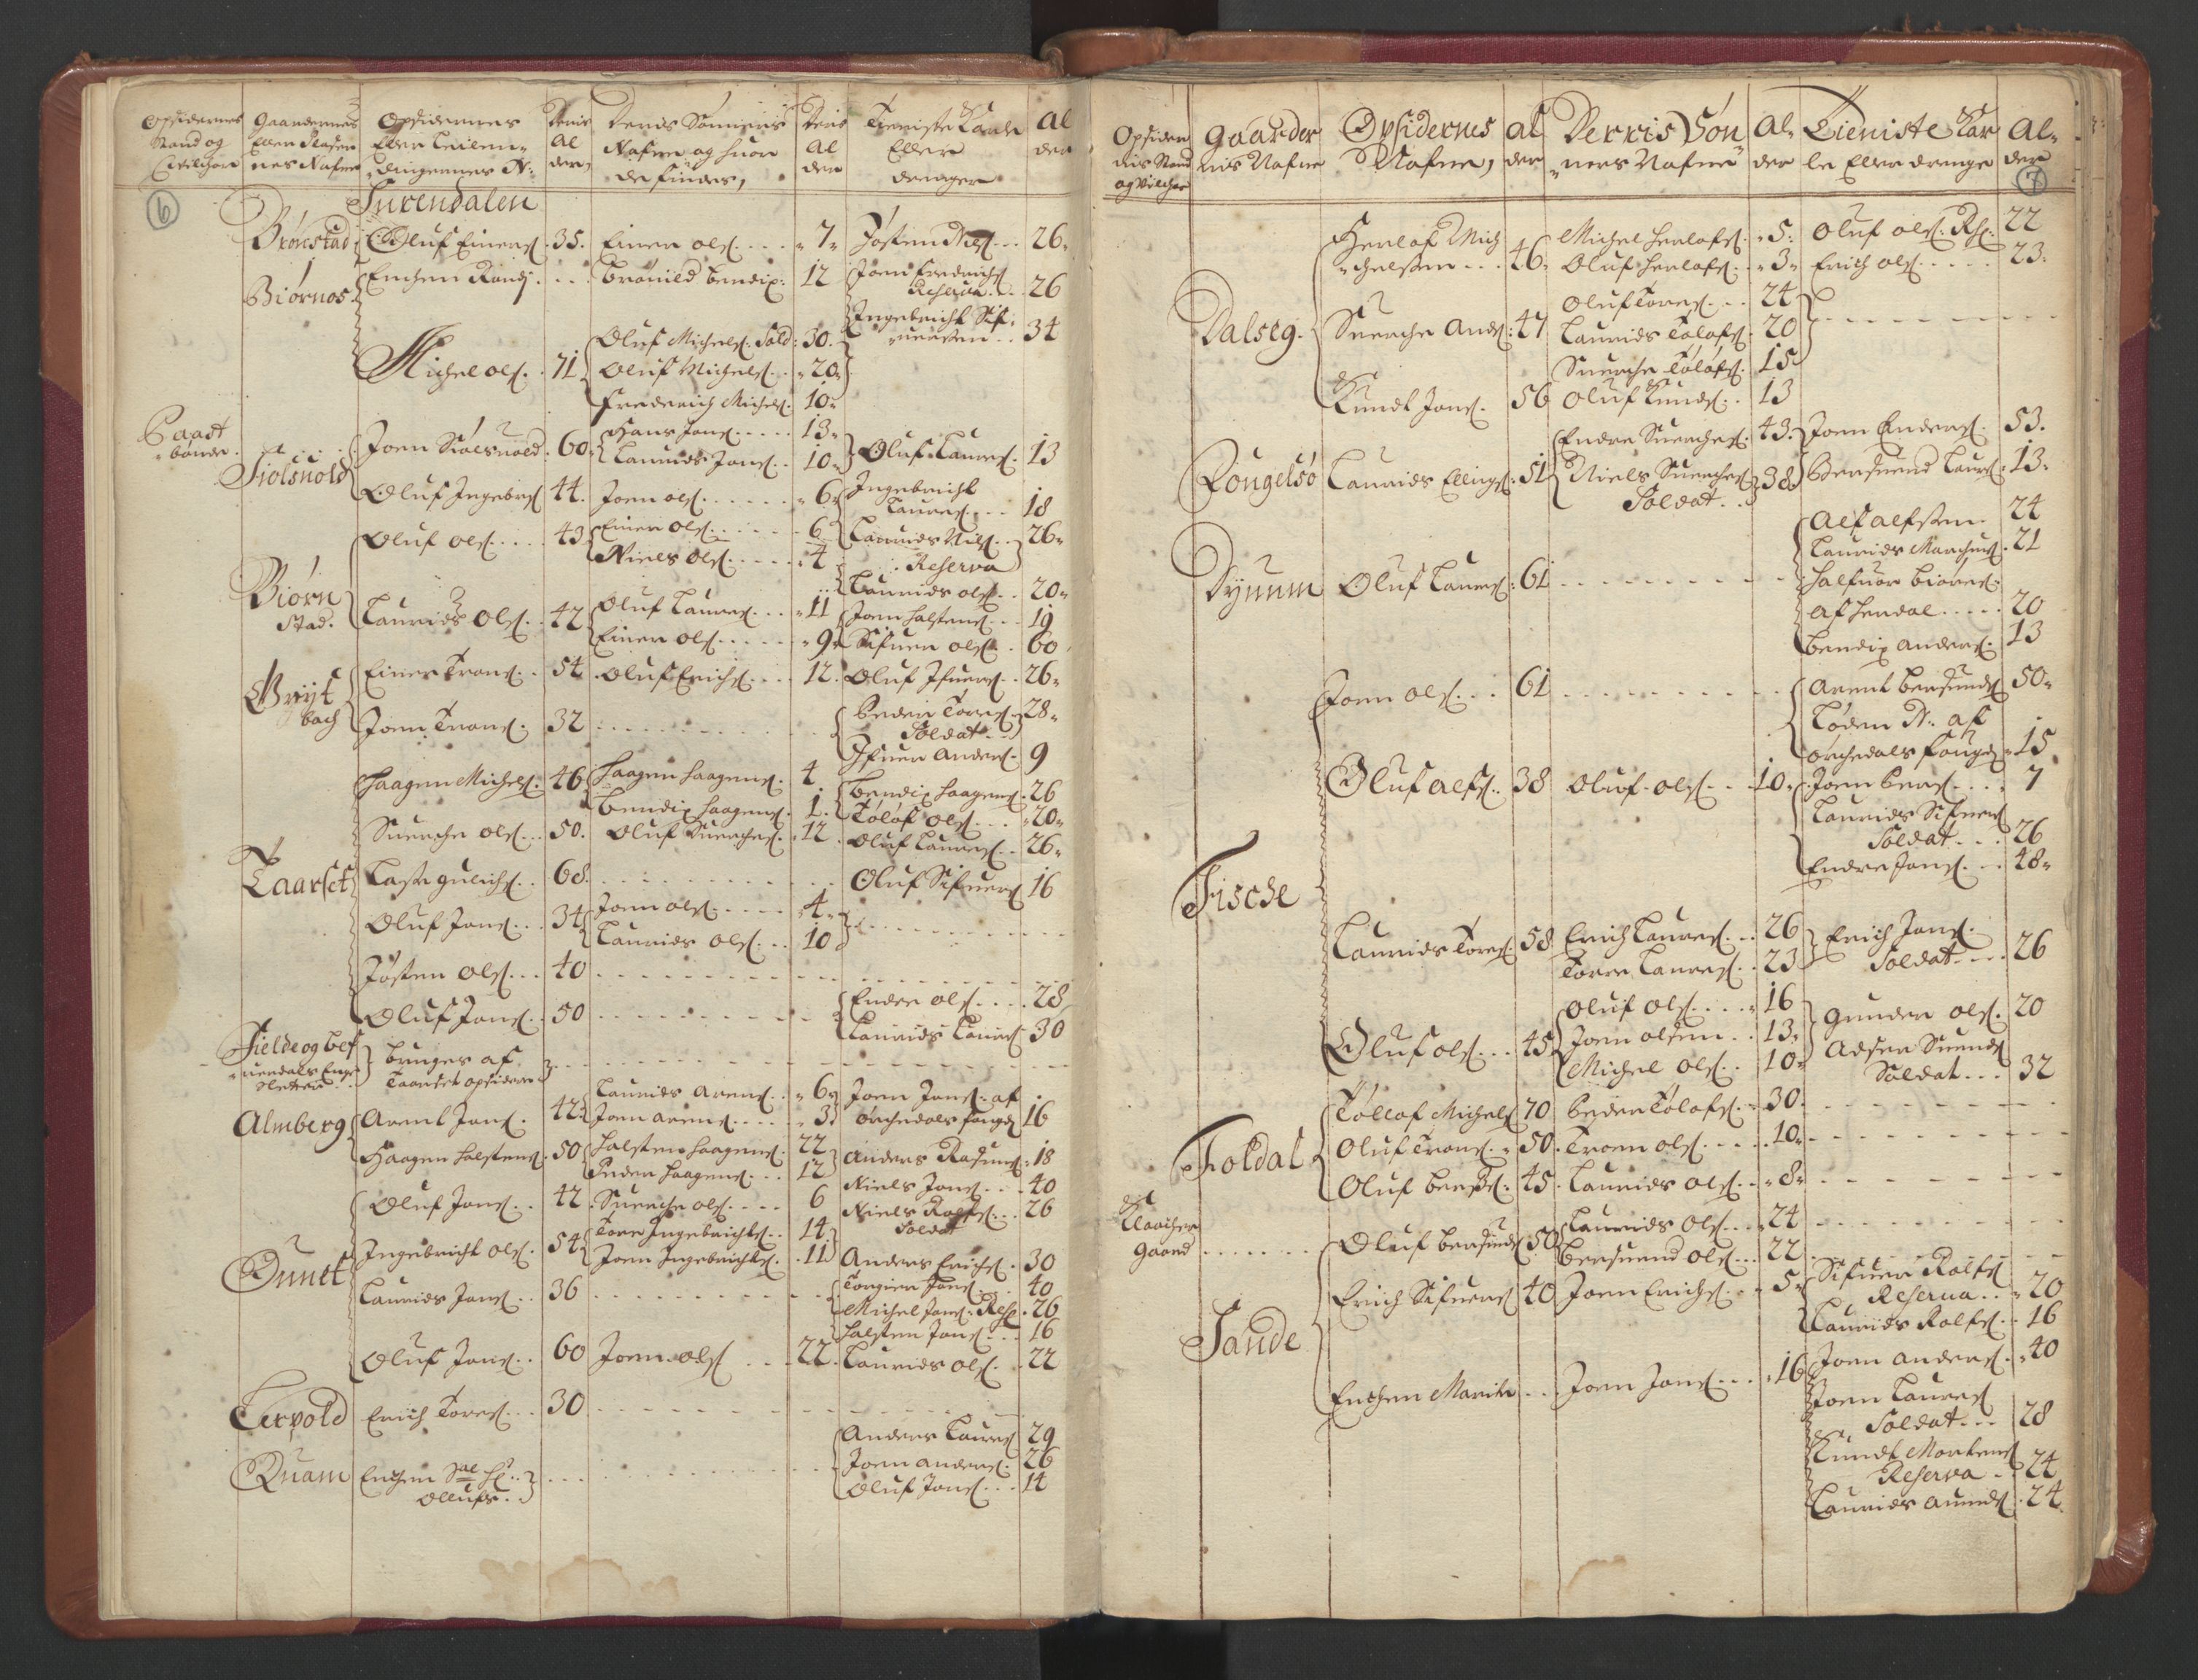 RA, Manntallet 1701, nr. 11: Nordmøre fogderi og Romsdal fogderi, 1701, s. 6-7